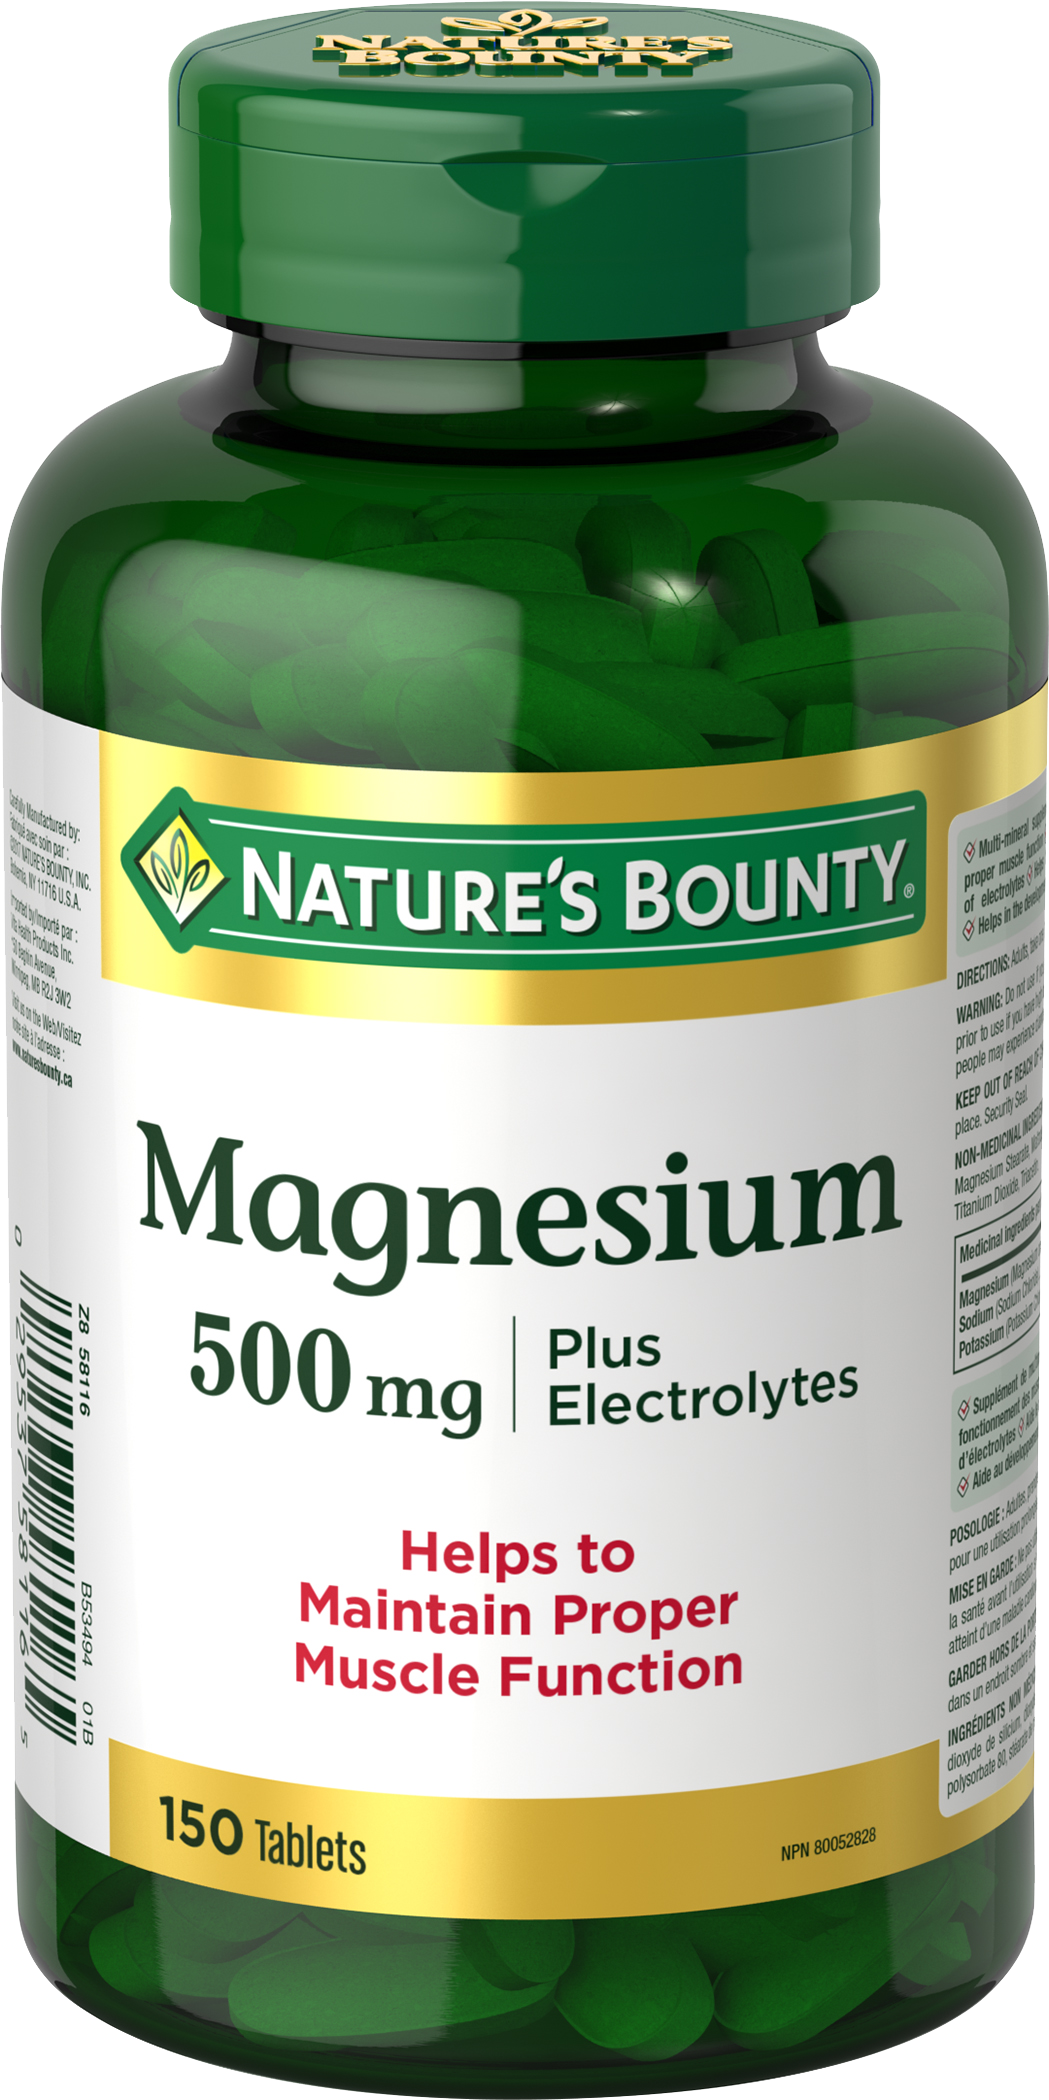 Magnesium Plus Electrolytes